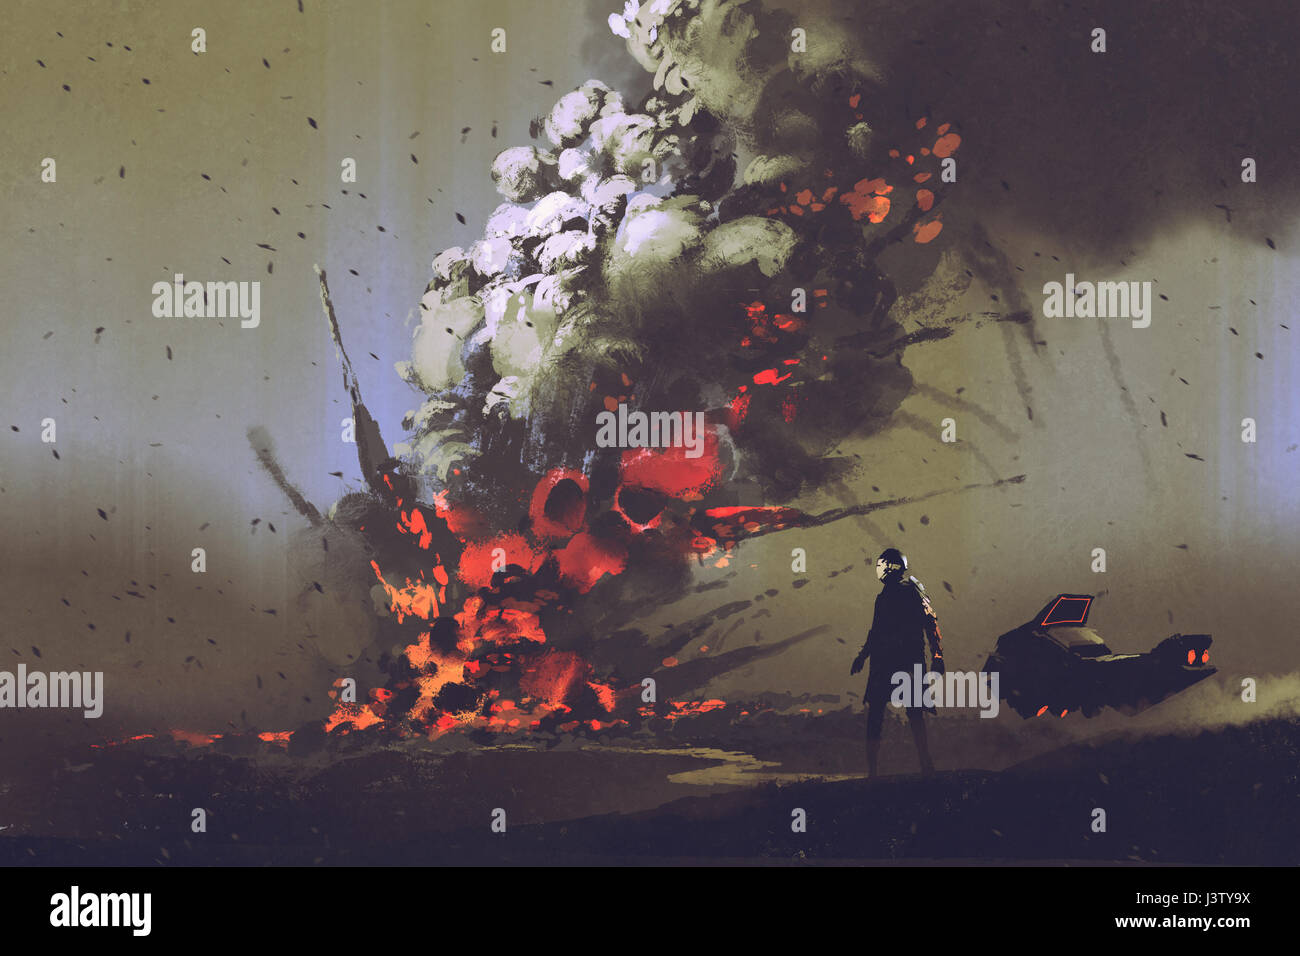 Sci-Fi-Szene des Mannes mit seinem Fahrzeug betrachten Bombenexplosion auf dem Boden, Illustration, Malerei Stockfoto